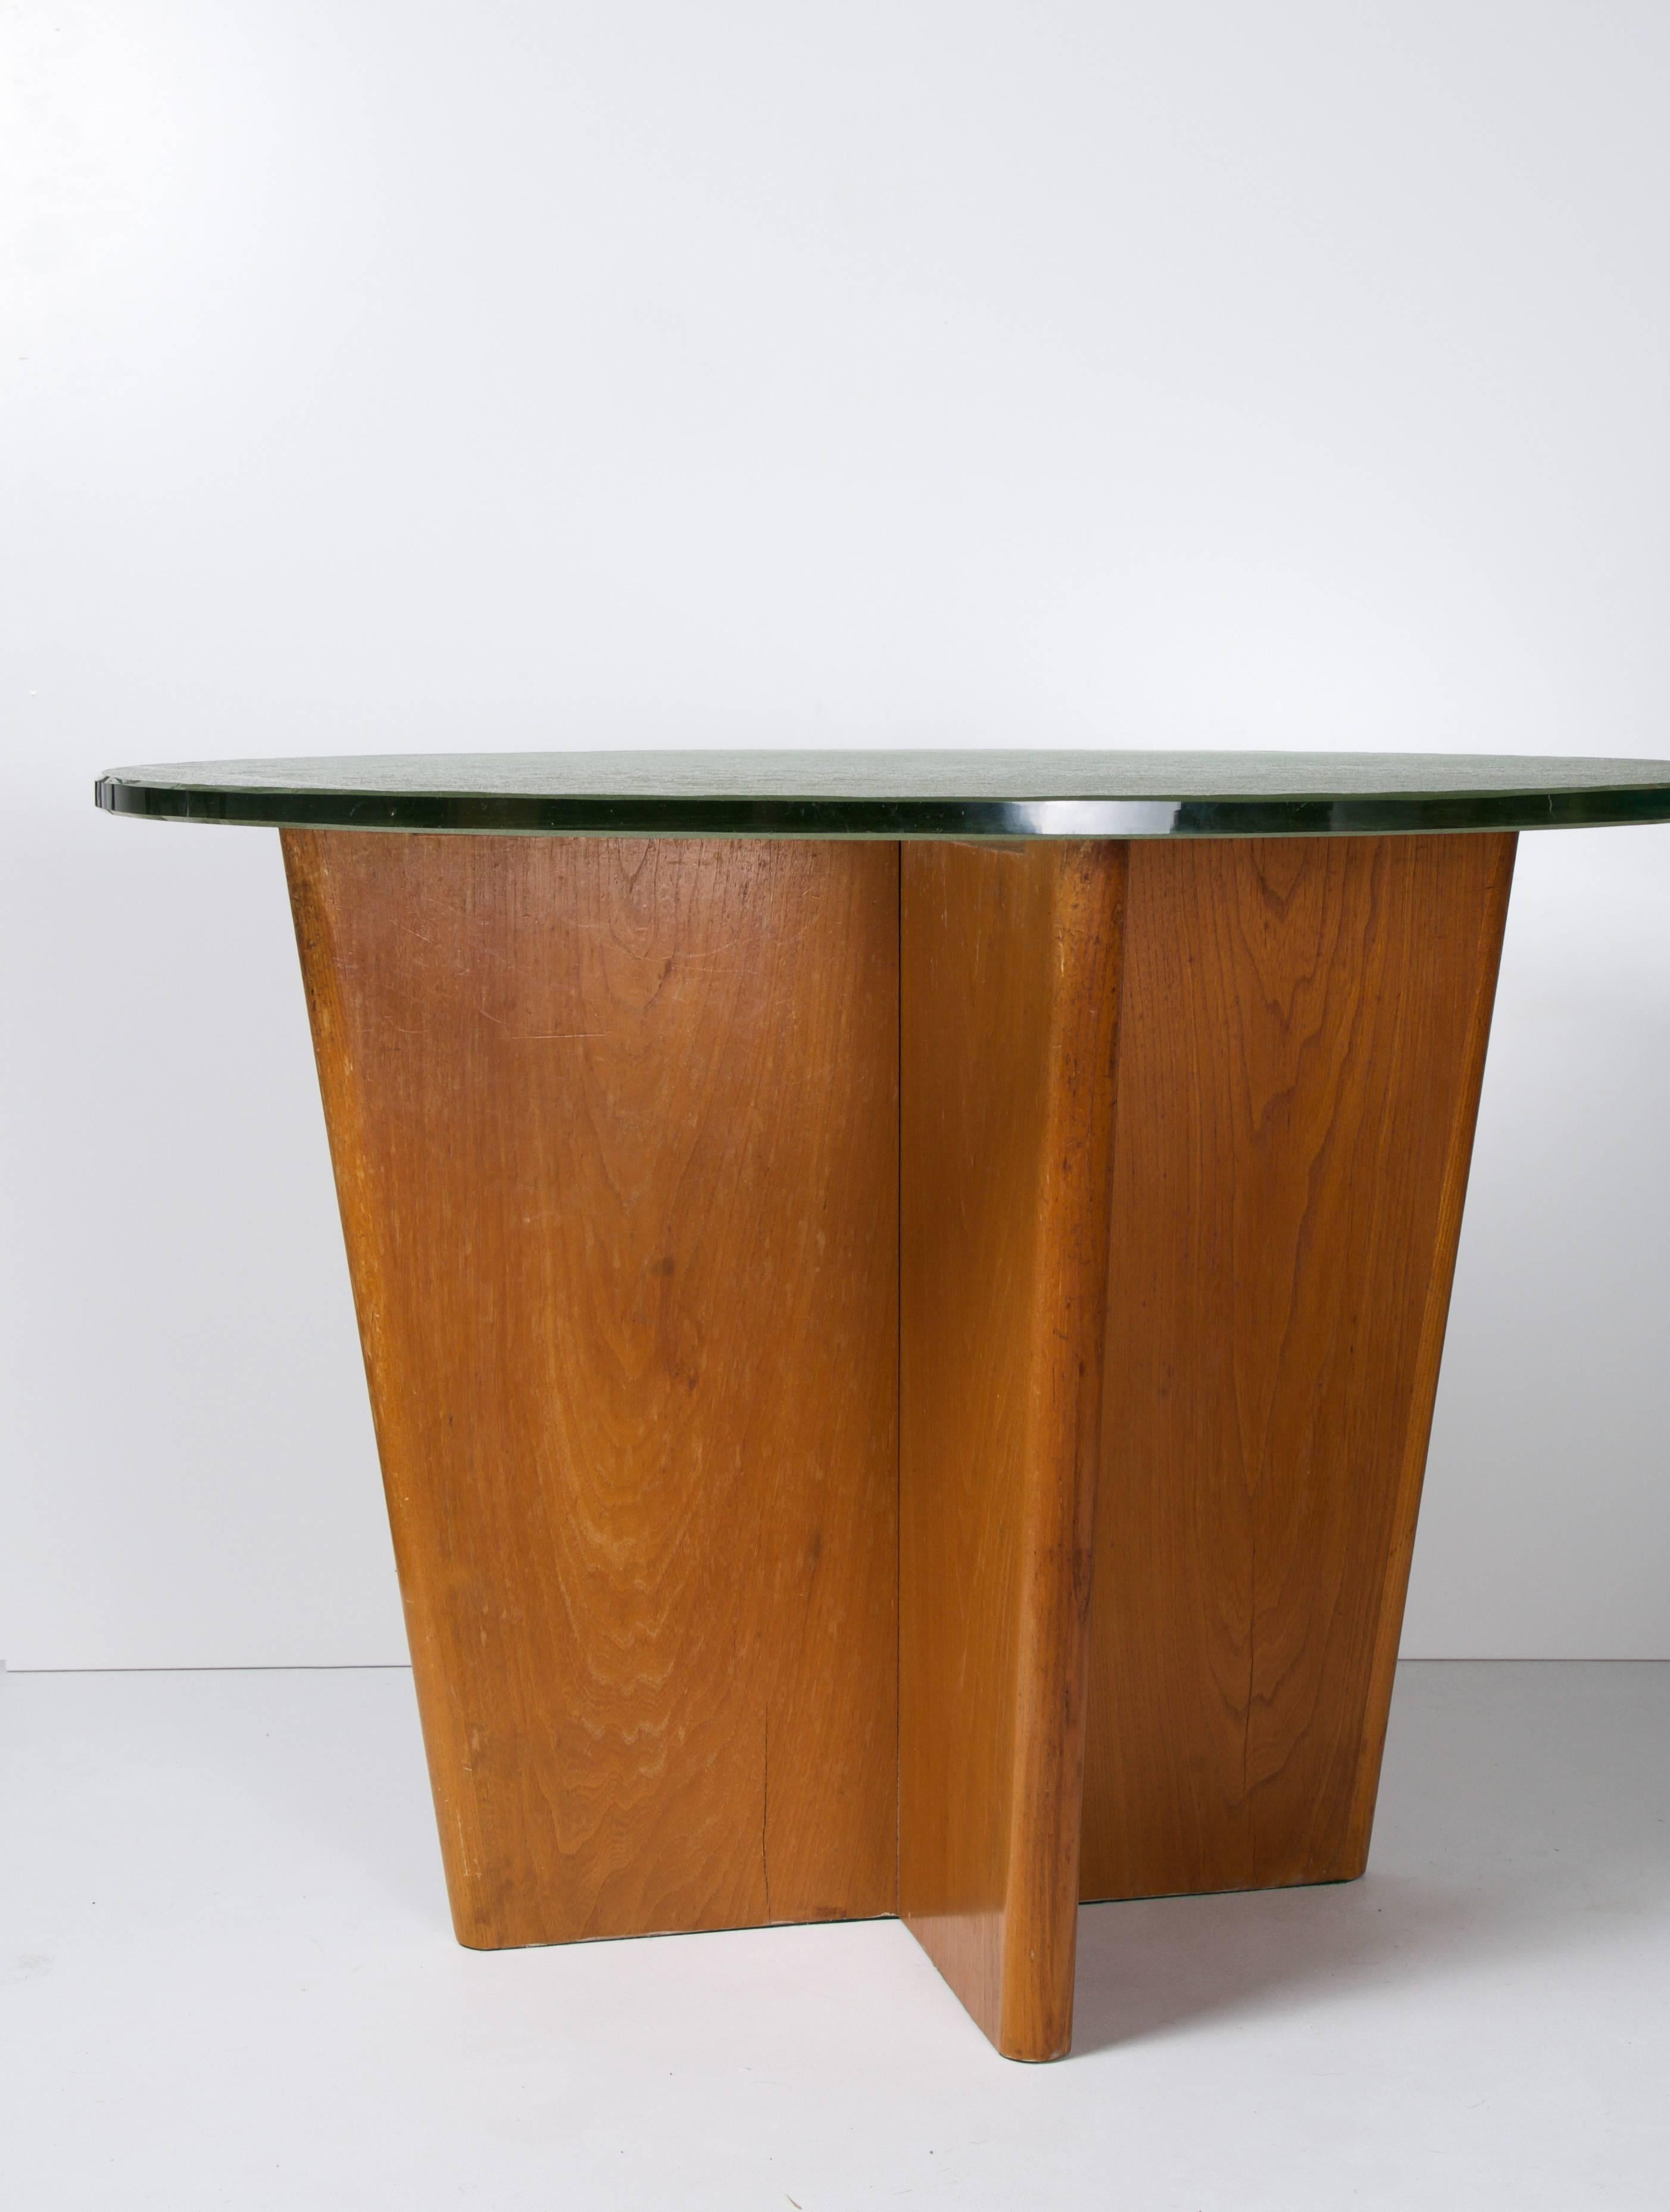 Glass Greta Magnusson-Grossman, Sofa Table, Studio, Sweden, 1930s